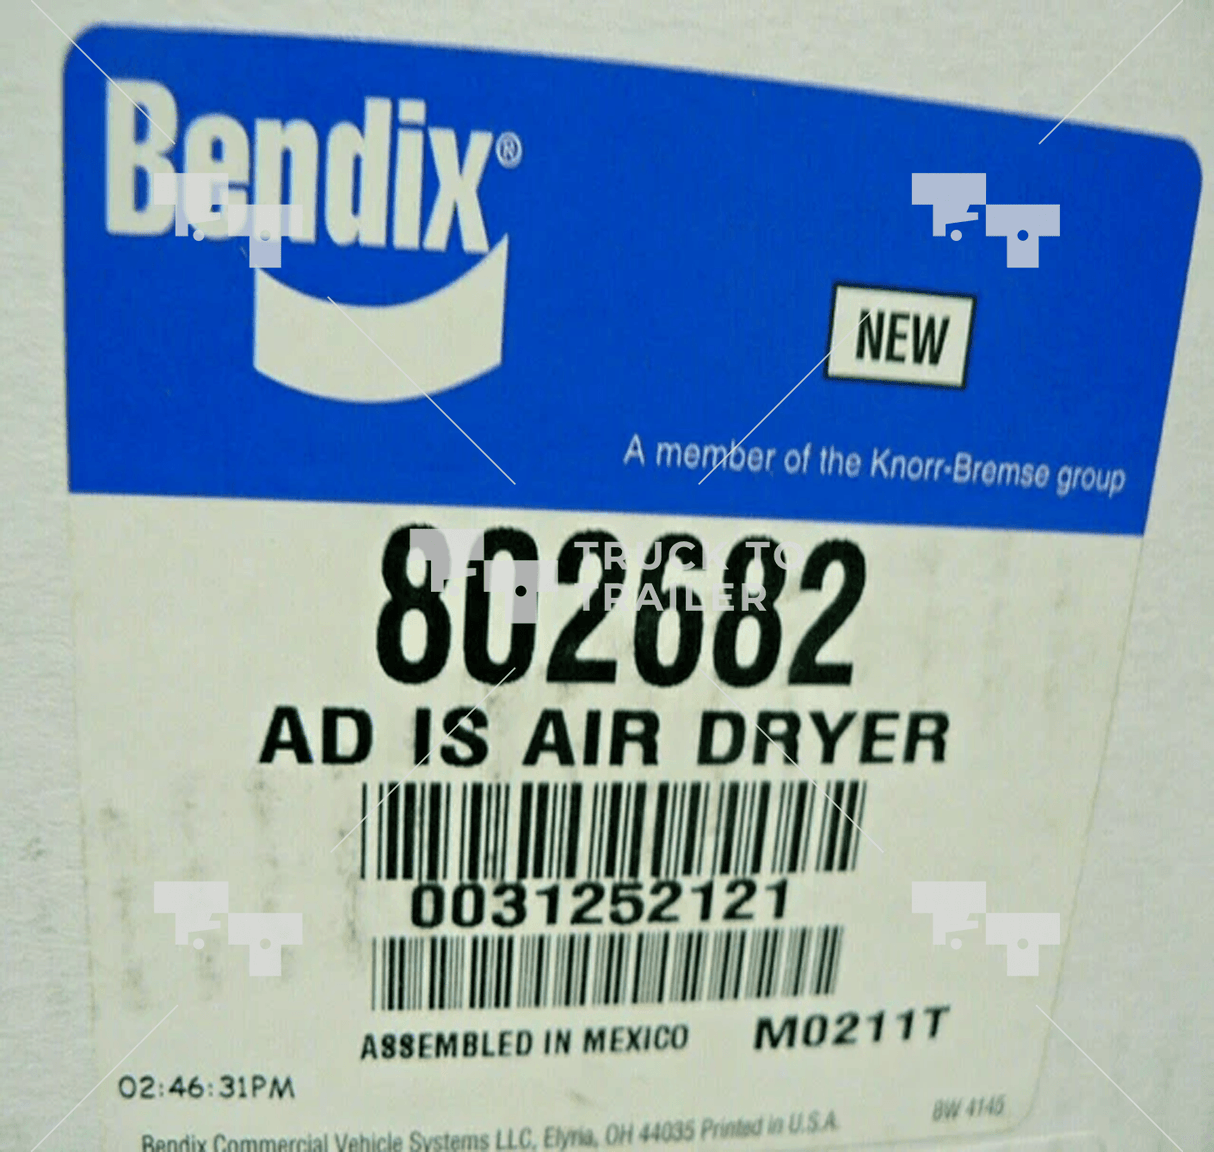 802682 Bw-802682 Oem Bendix Ad-Is Air Brake Dryer Bw-802682.